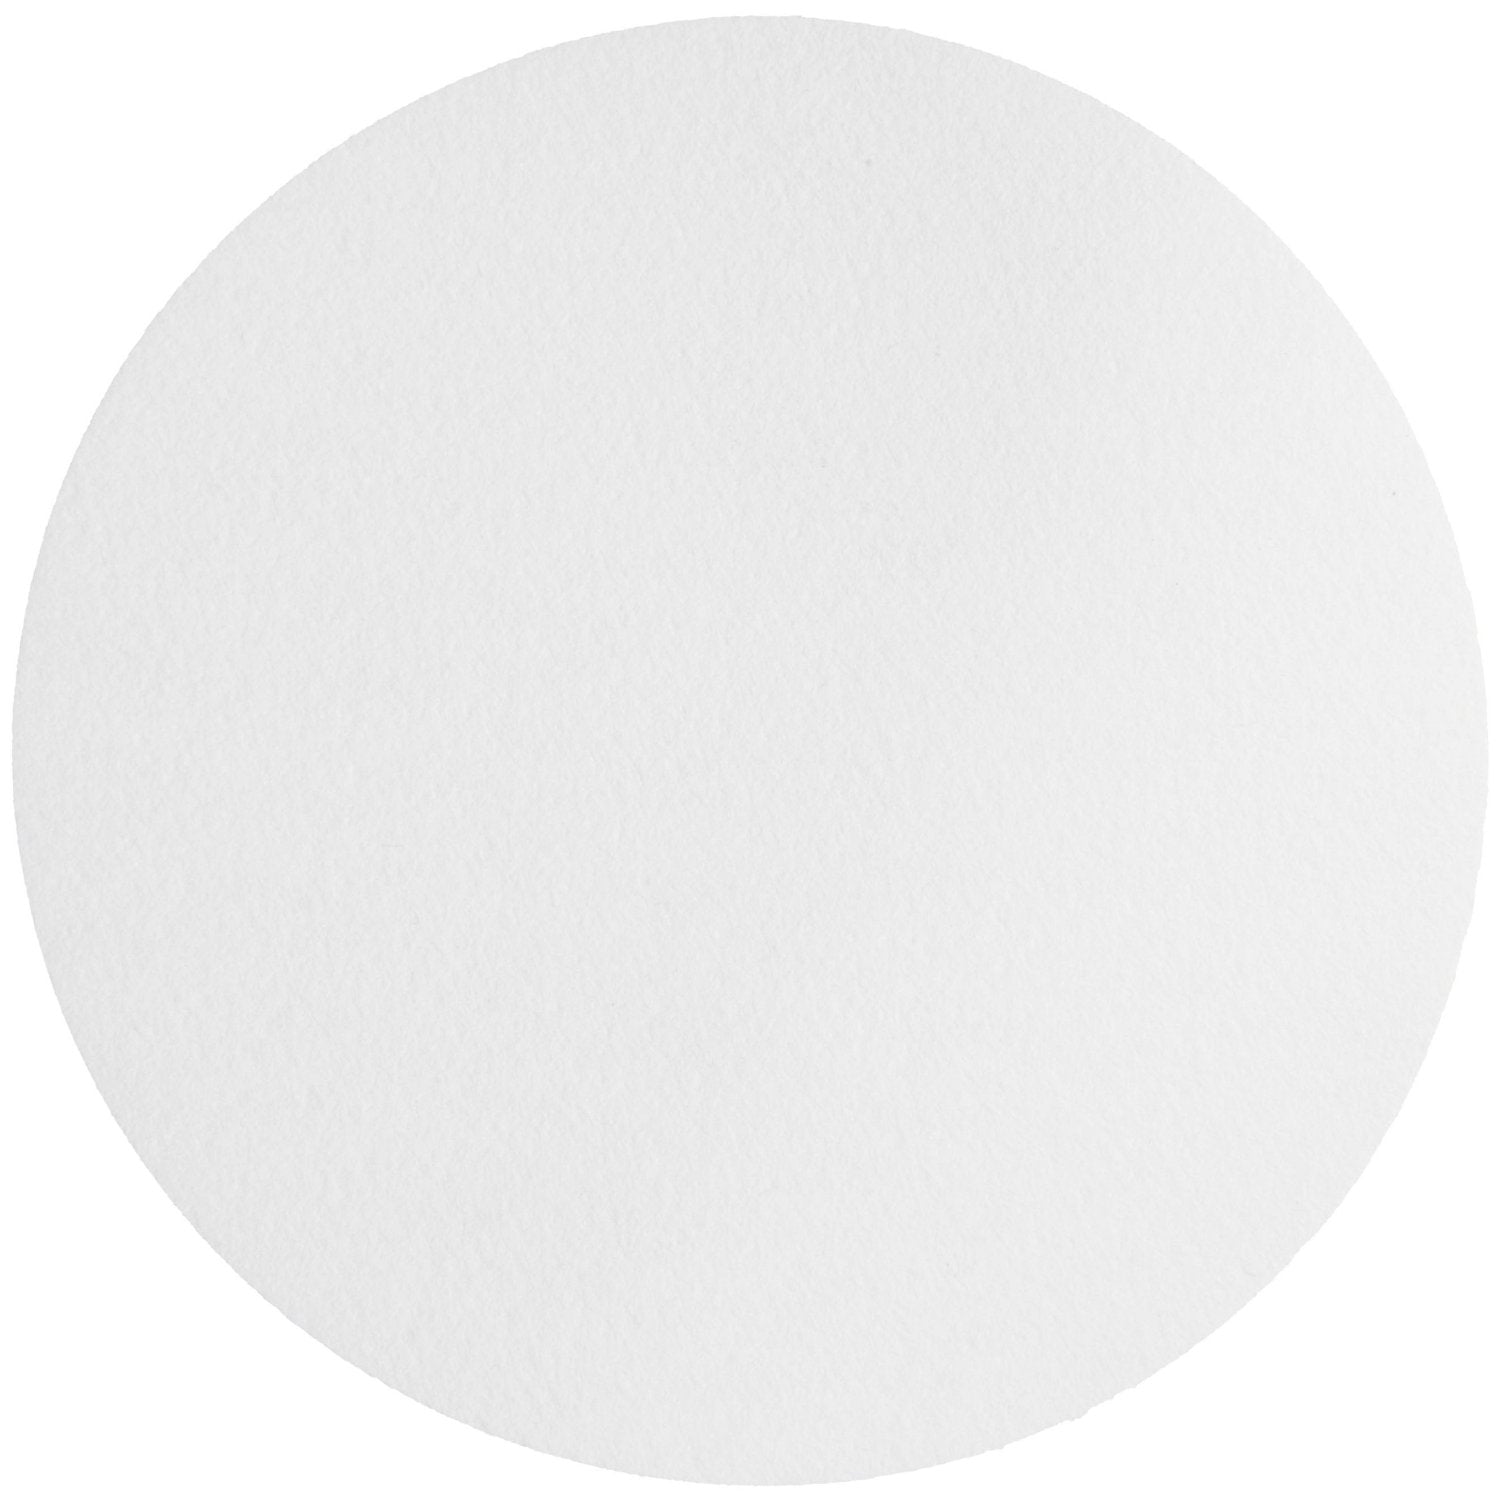 Whatman 10400106 Cellulose Nitrate, 25mm Dia, 8.0 micrometer Pore Size, Plain White, 100/pk (PN: 10400106)